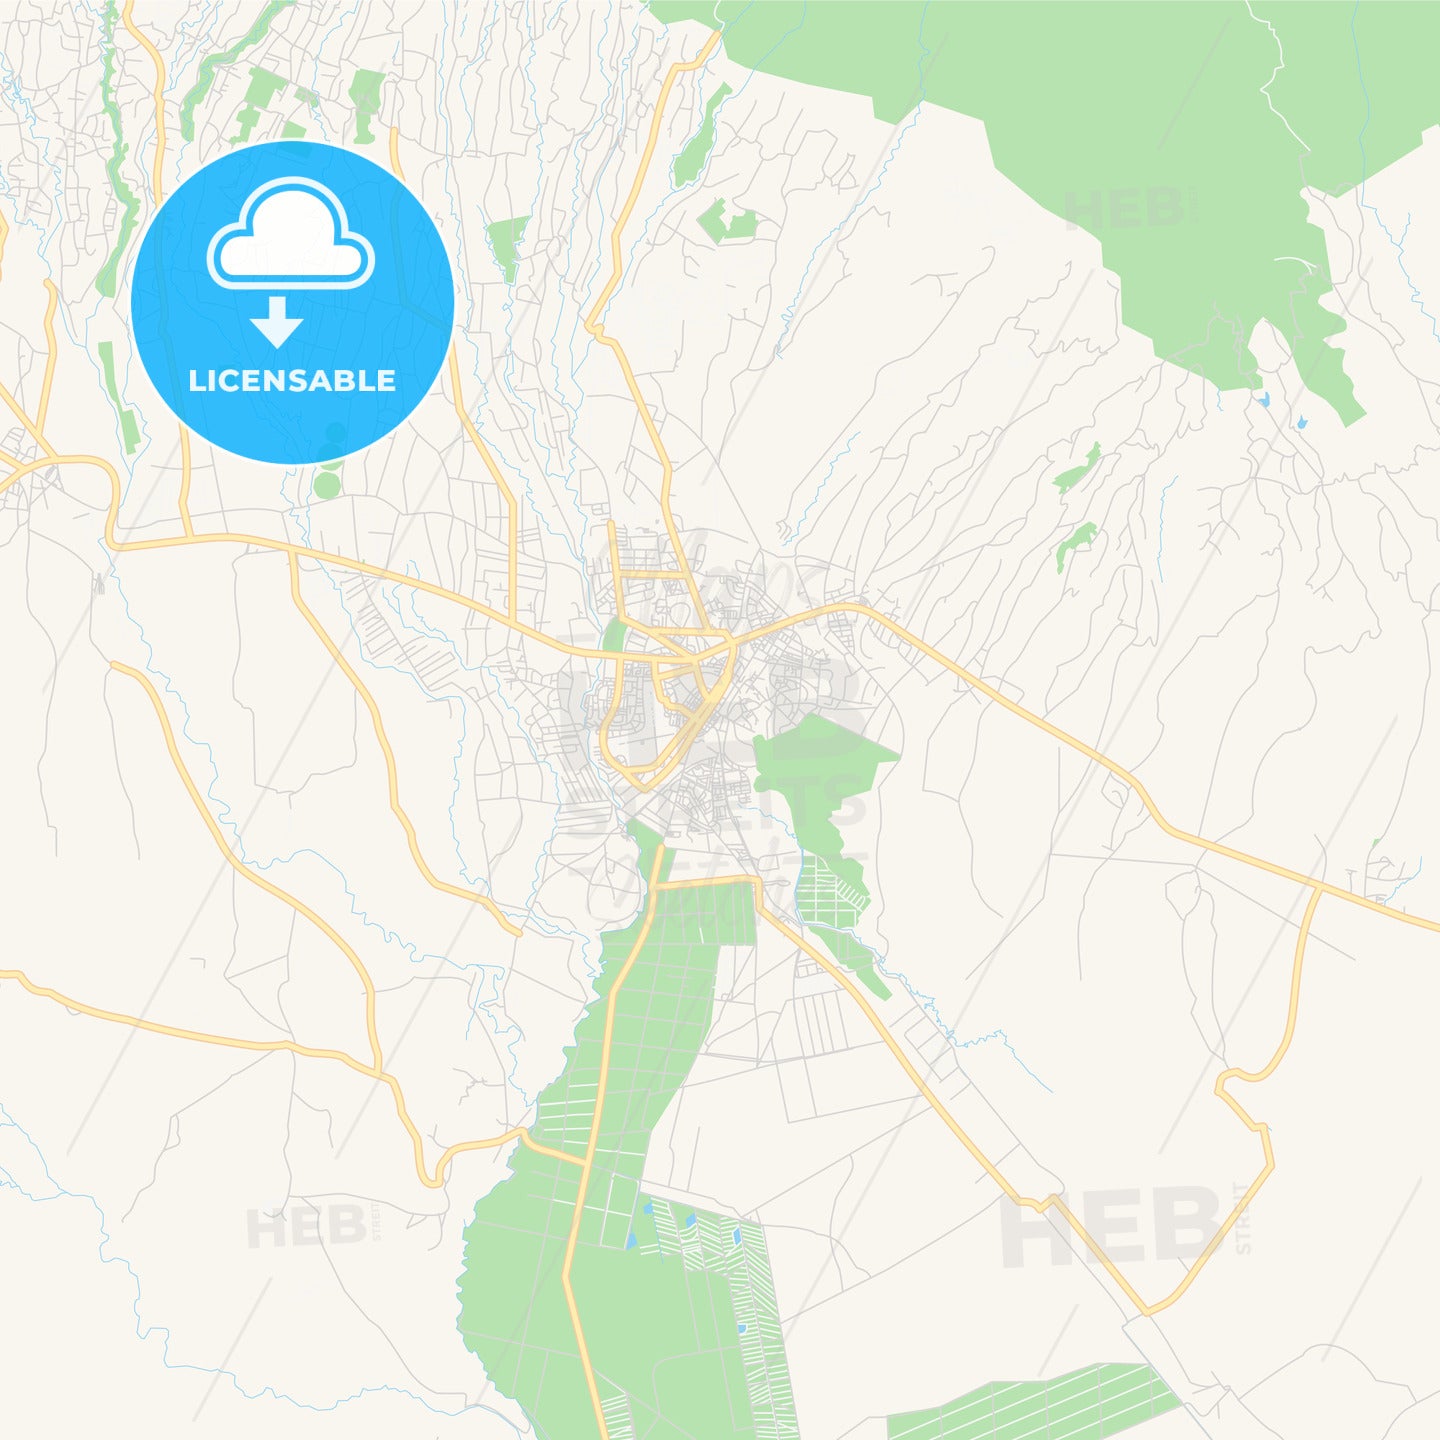 Printable street map of Moshi, Tanzania